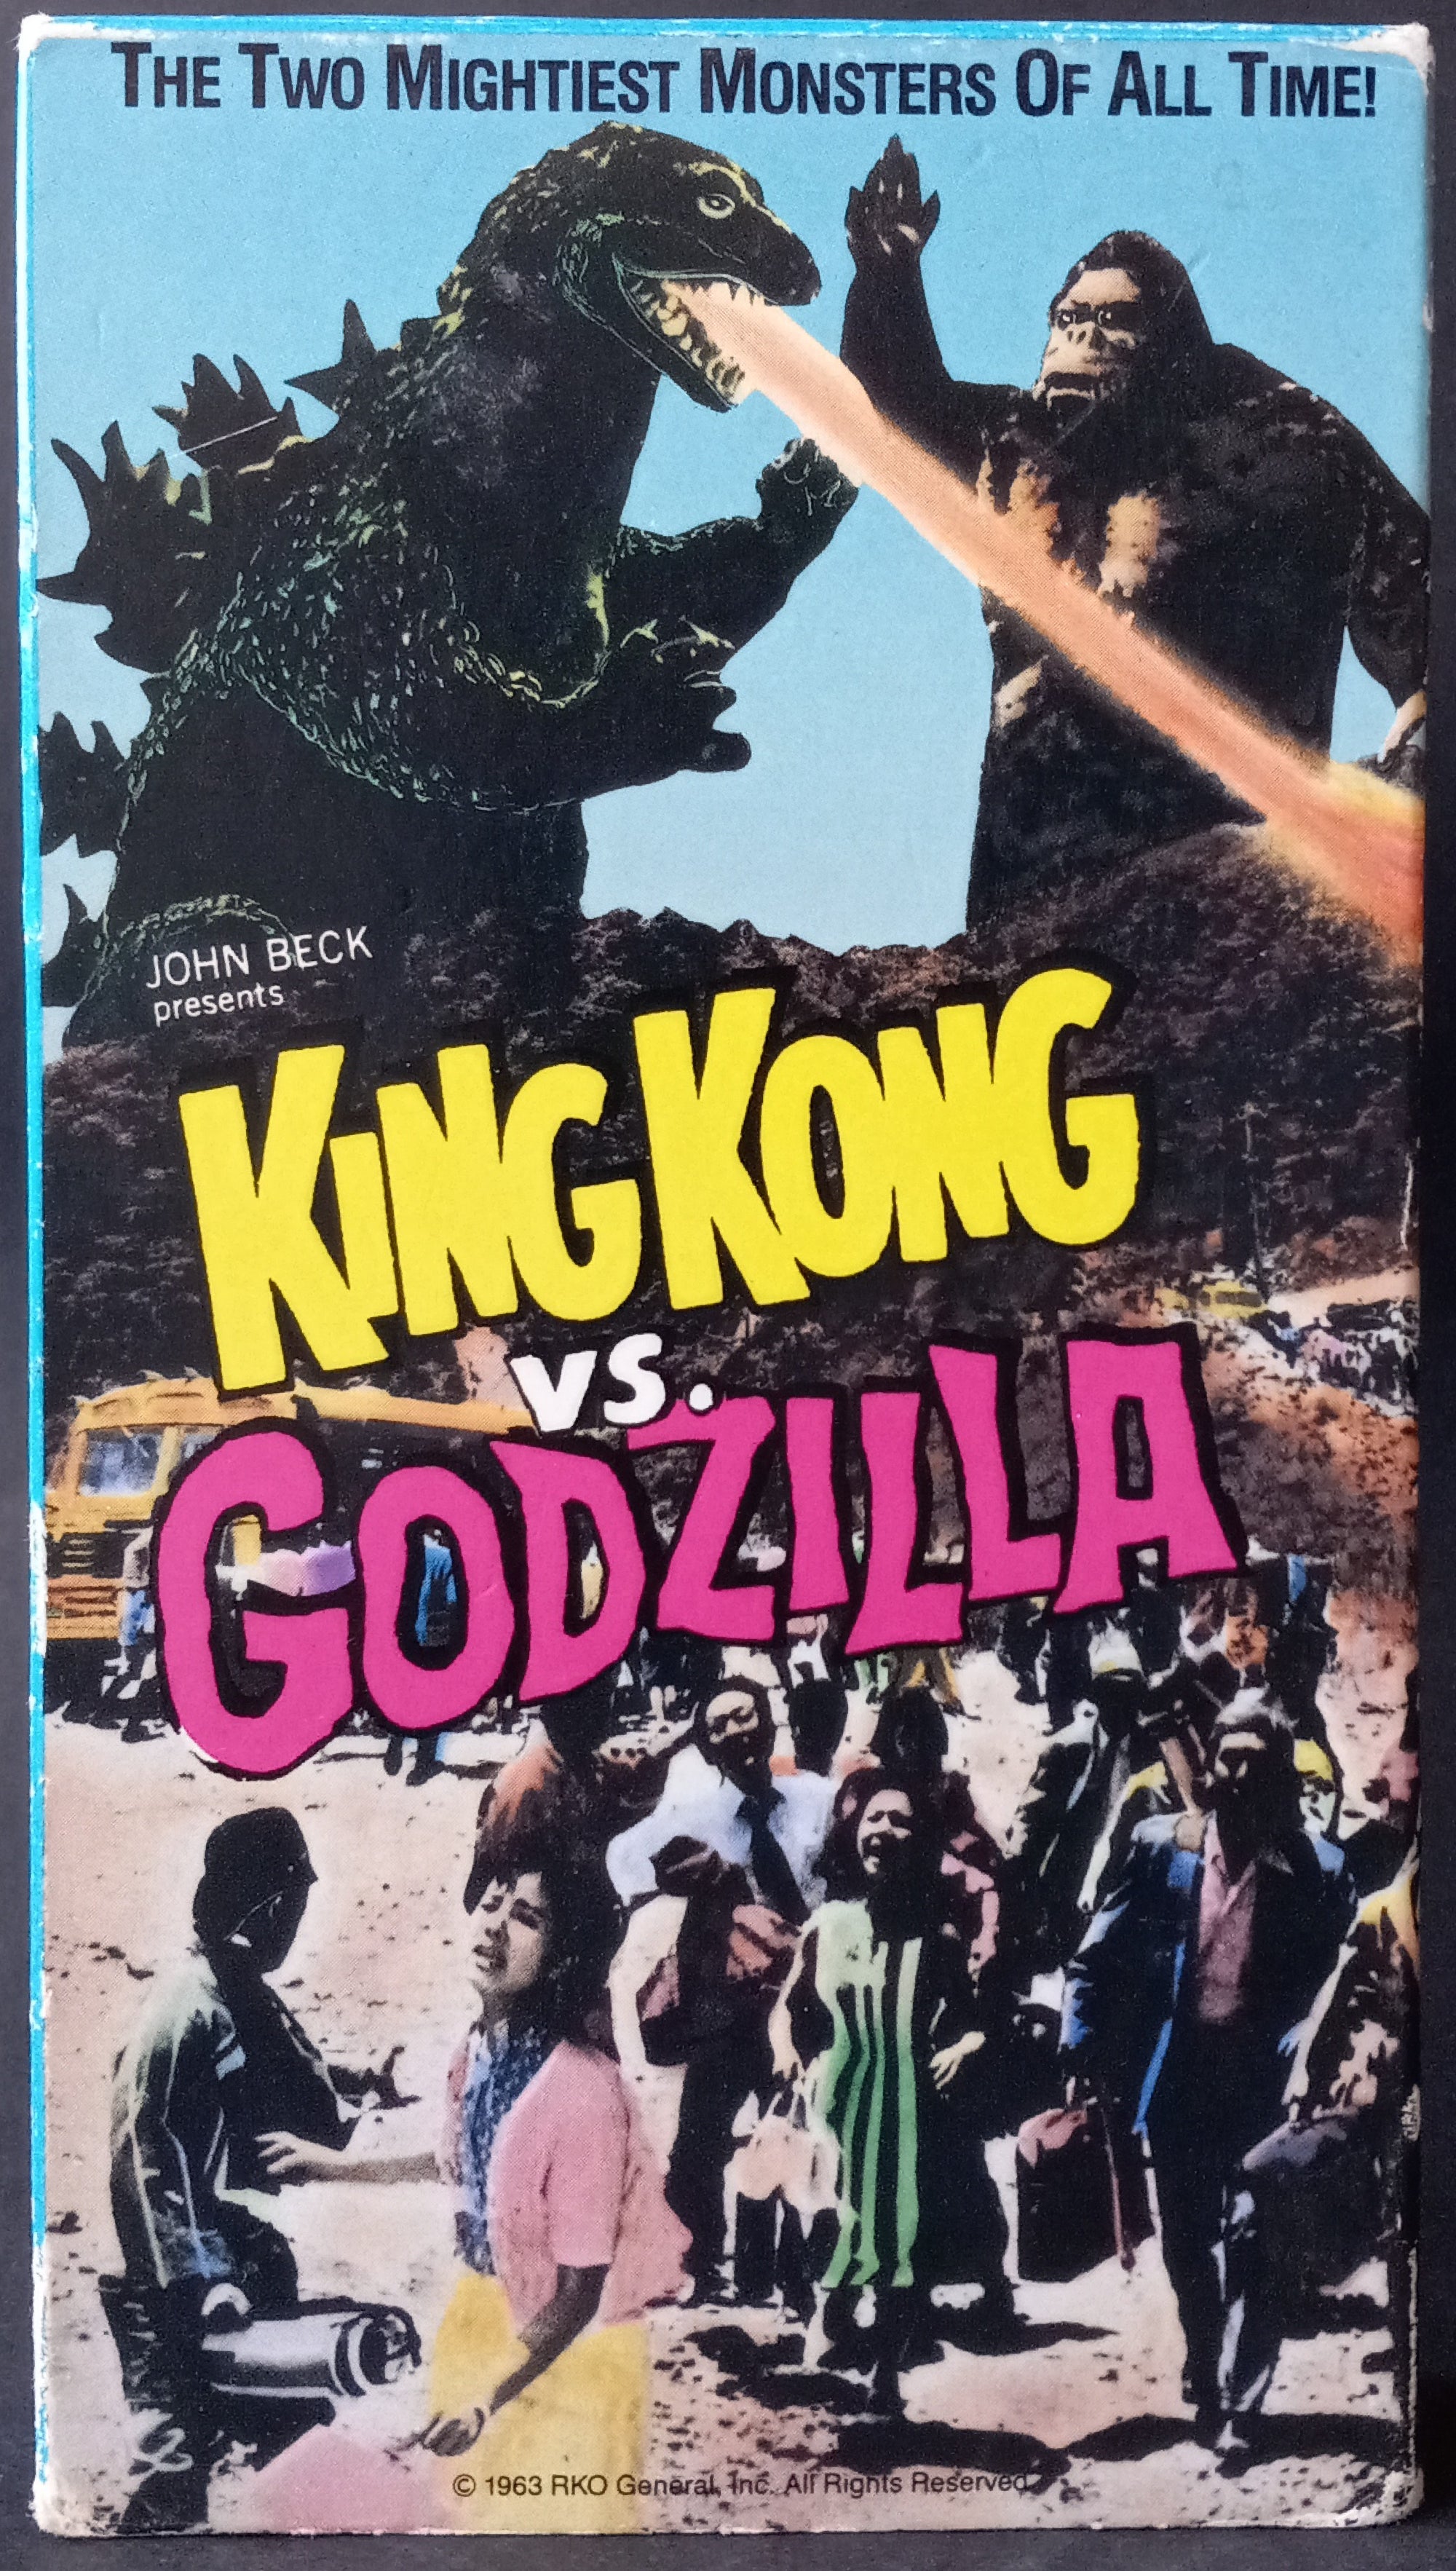 Godzilla-King-Kong-VHS